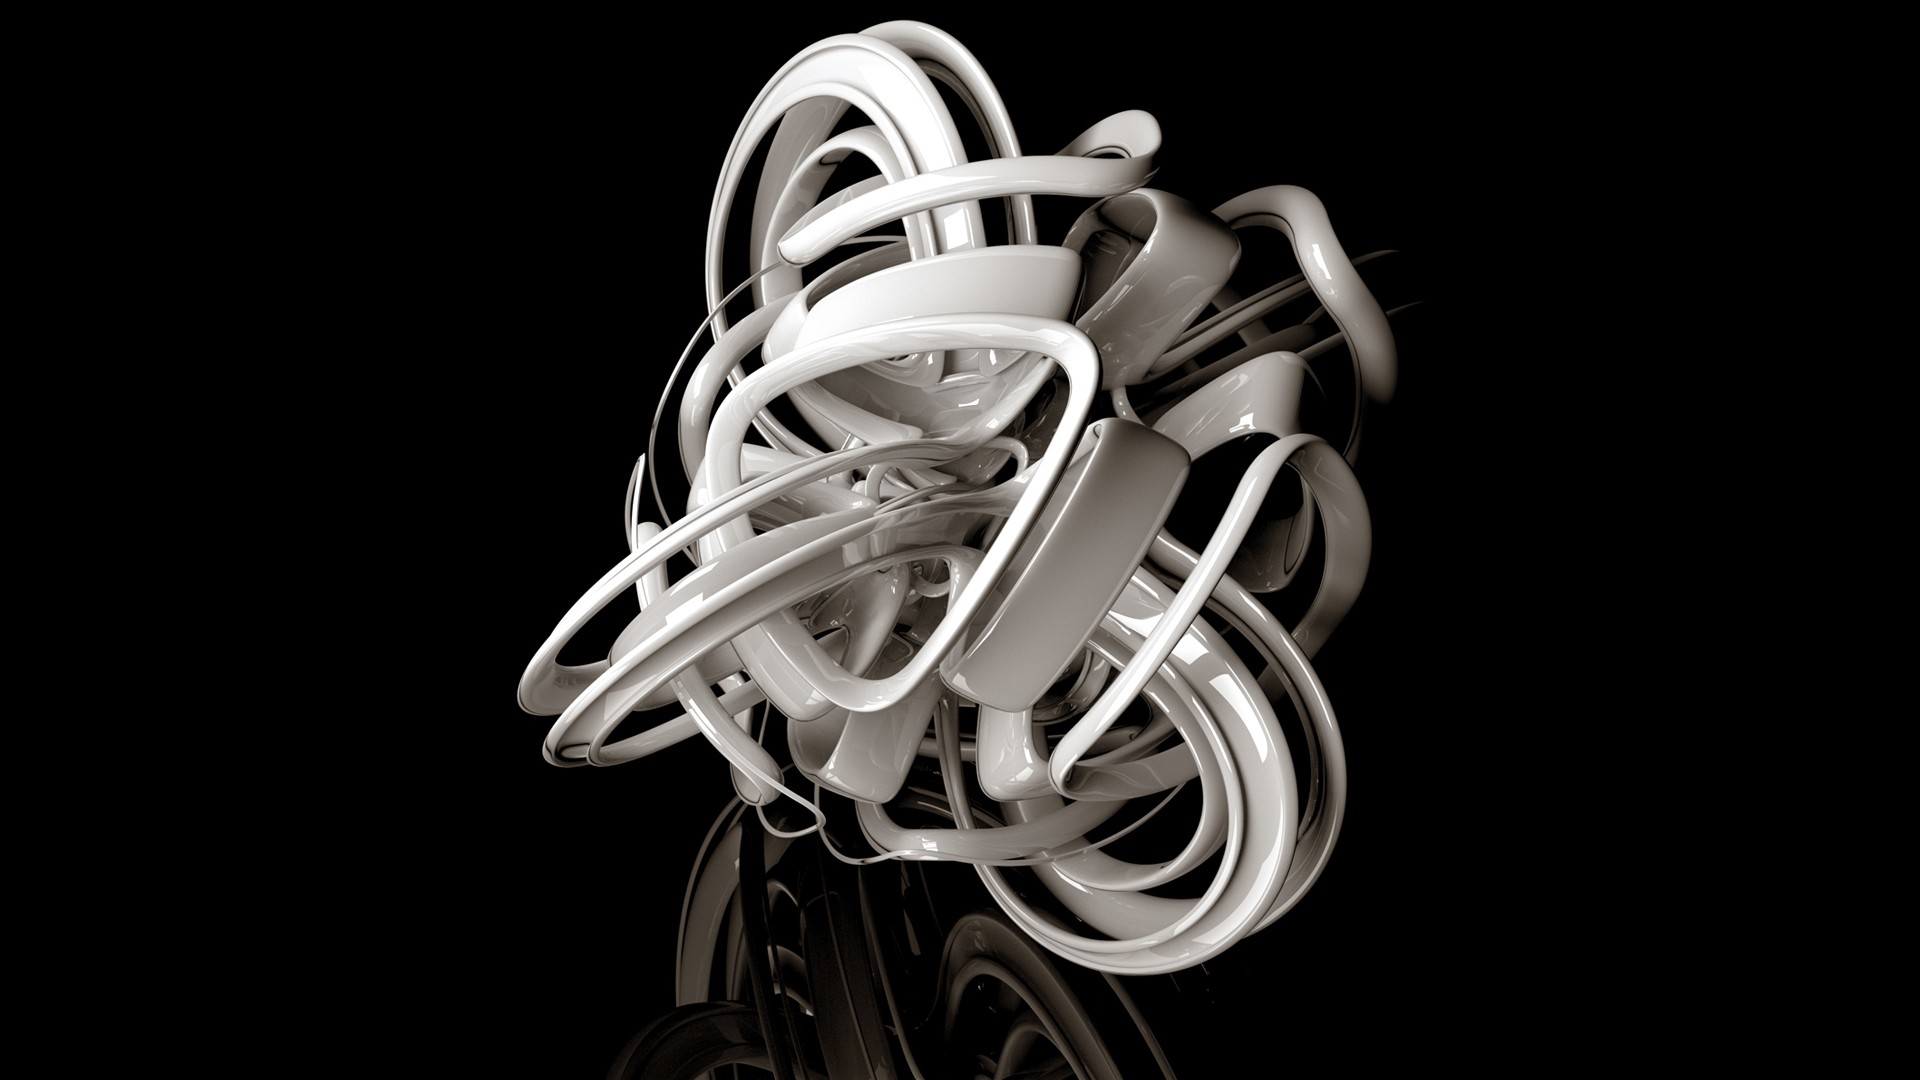 General 1920x1080 digital art black background minimalism CGI abstract reflection shiny white shapes swirls